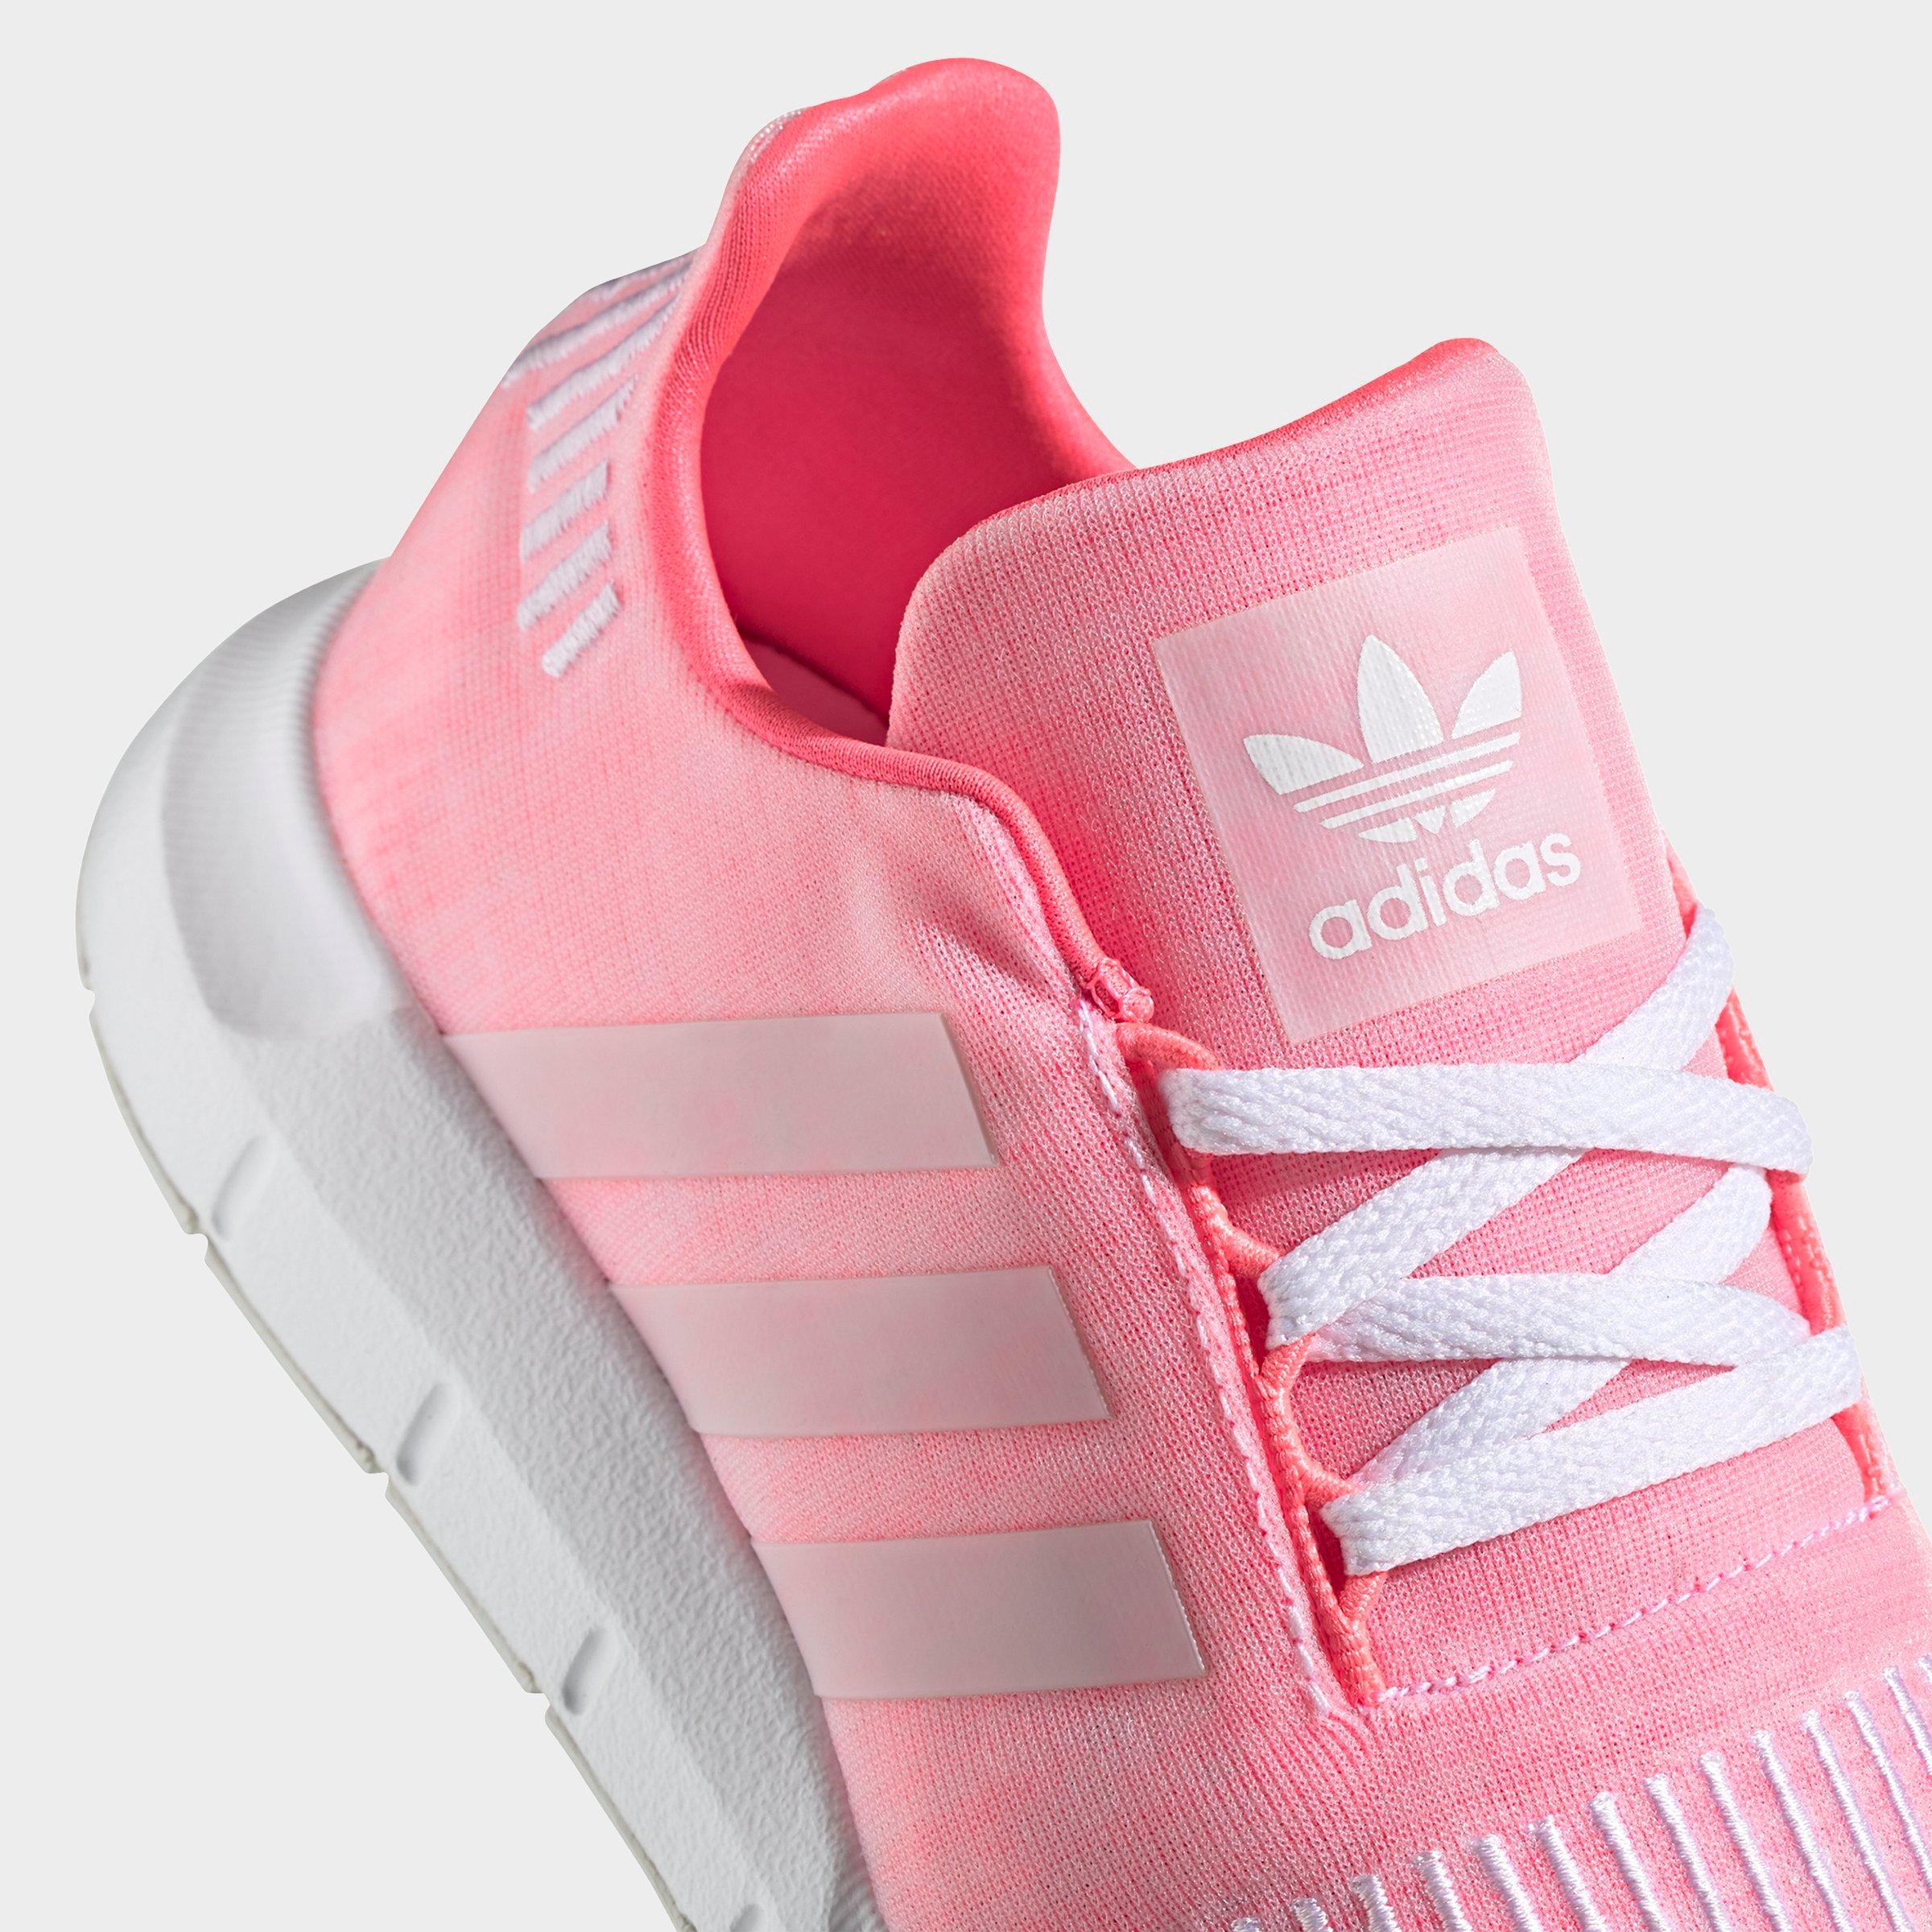 adidas swift run kids pink